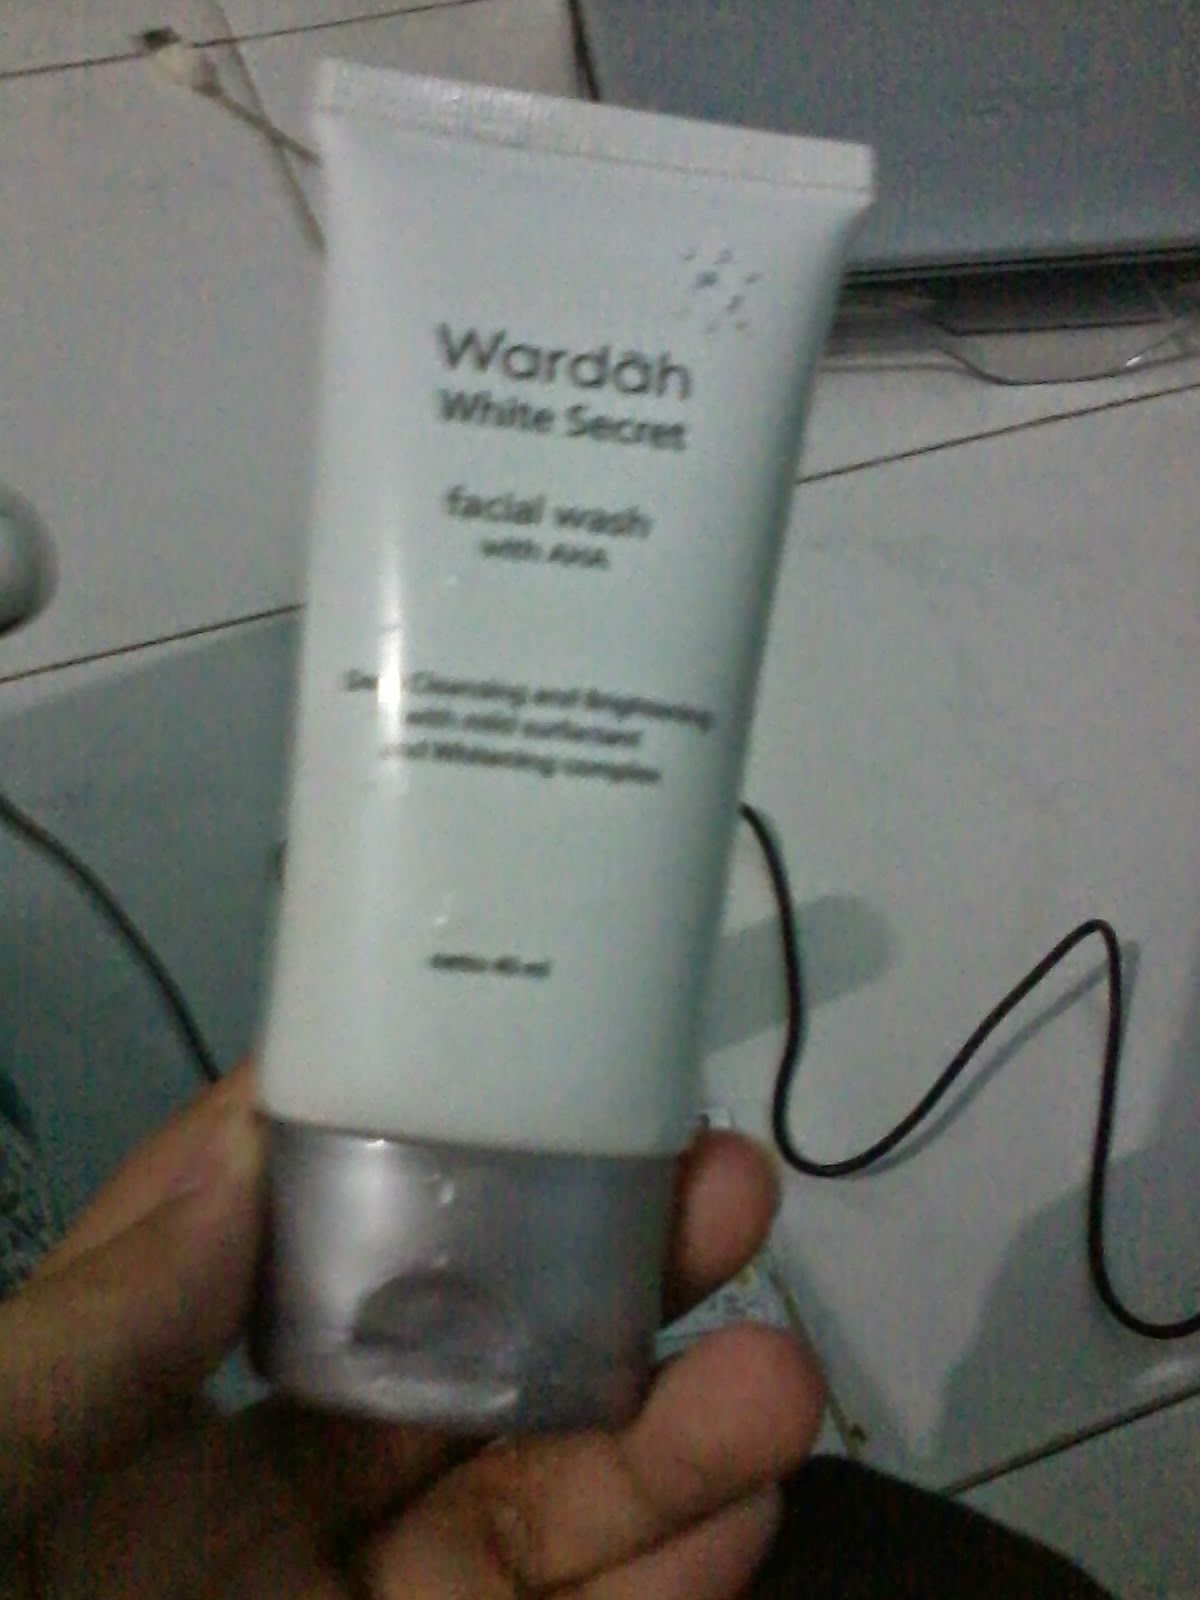 Review Wardah White Secret Facial Wash with AHA ~ La blog